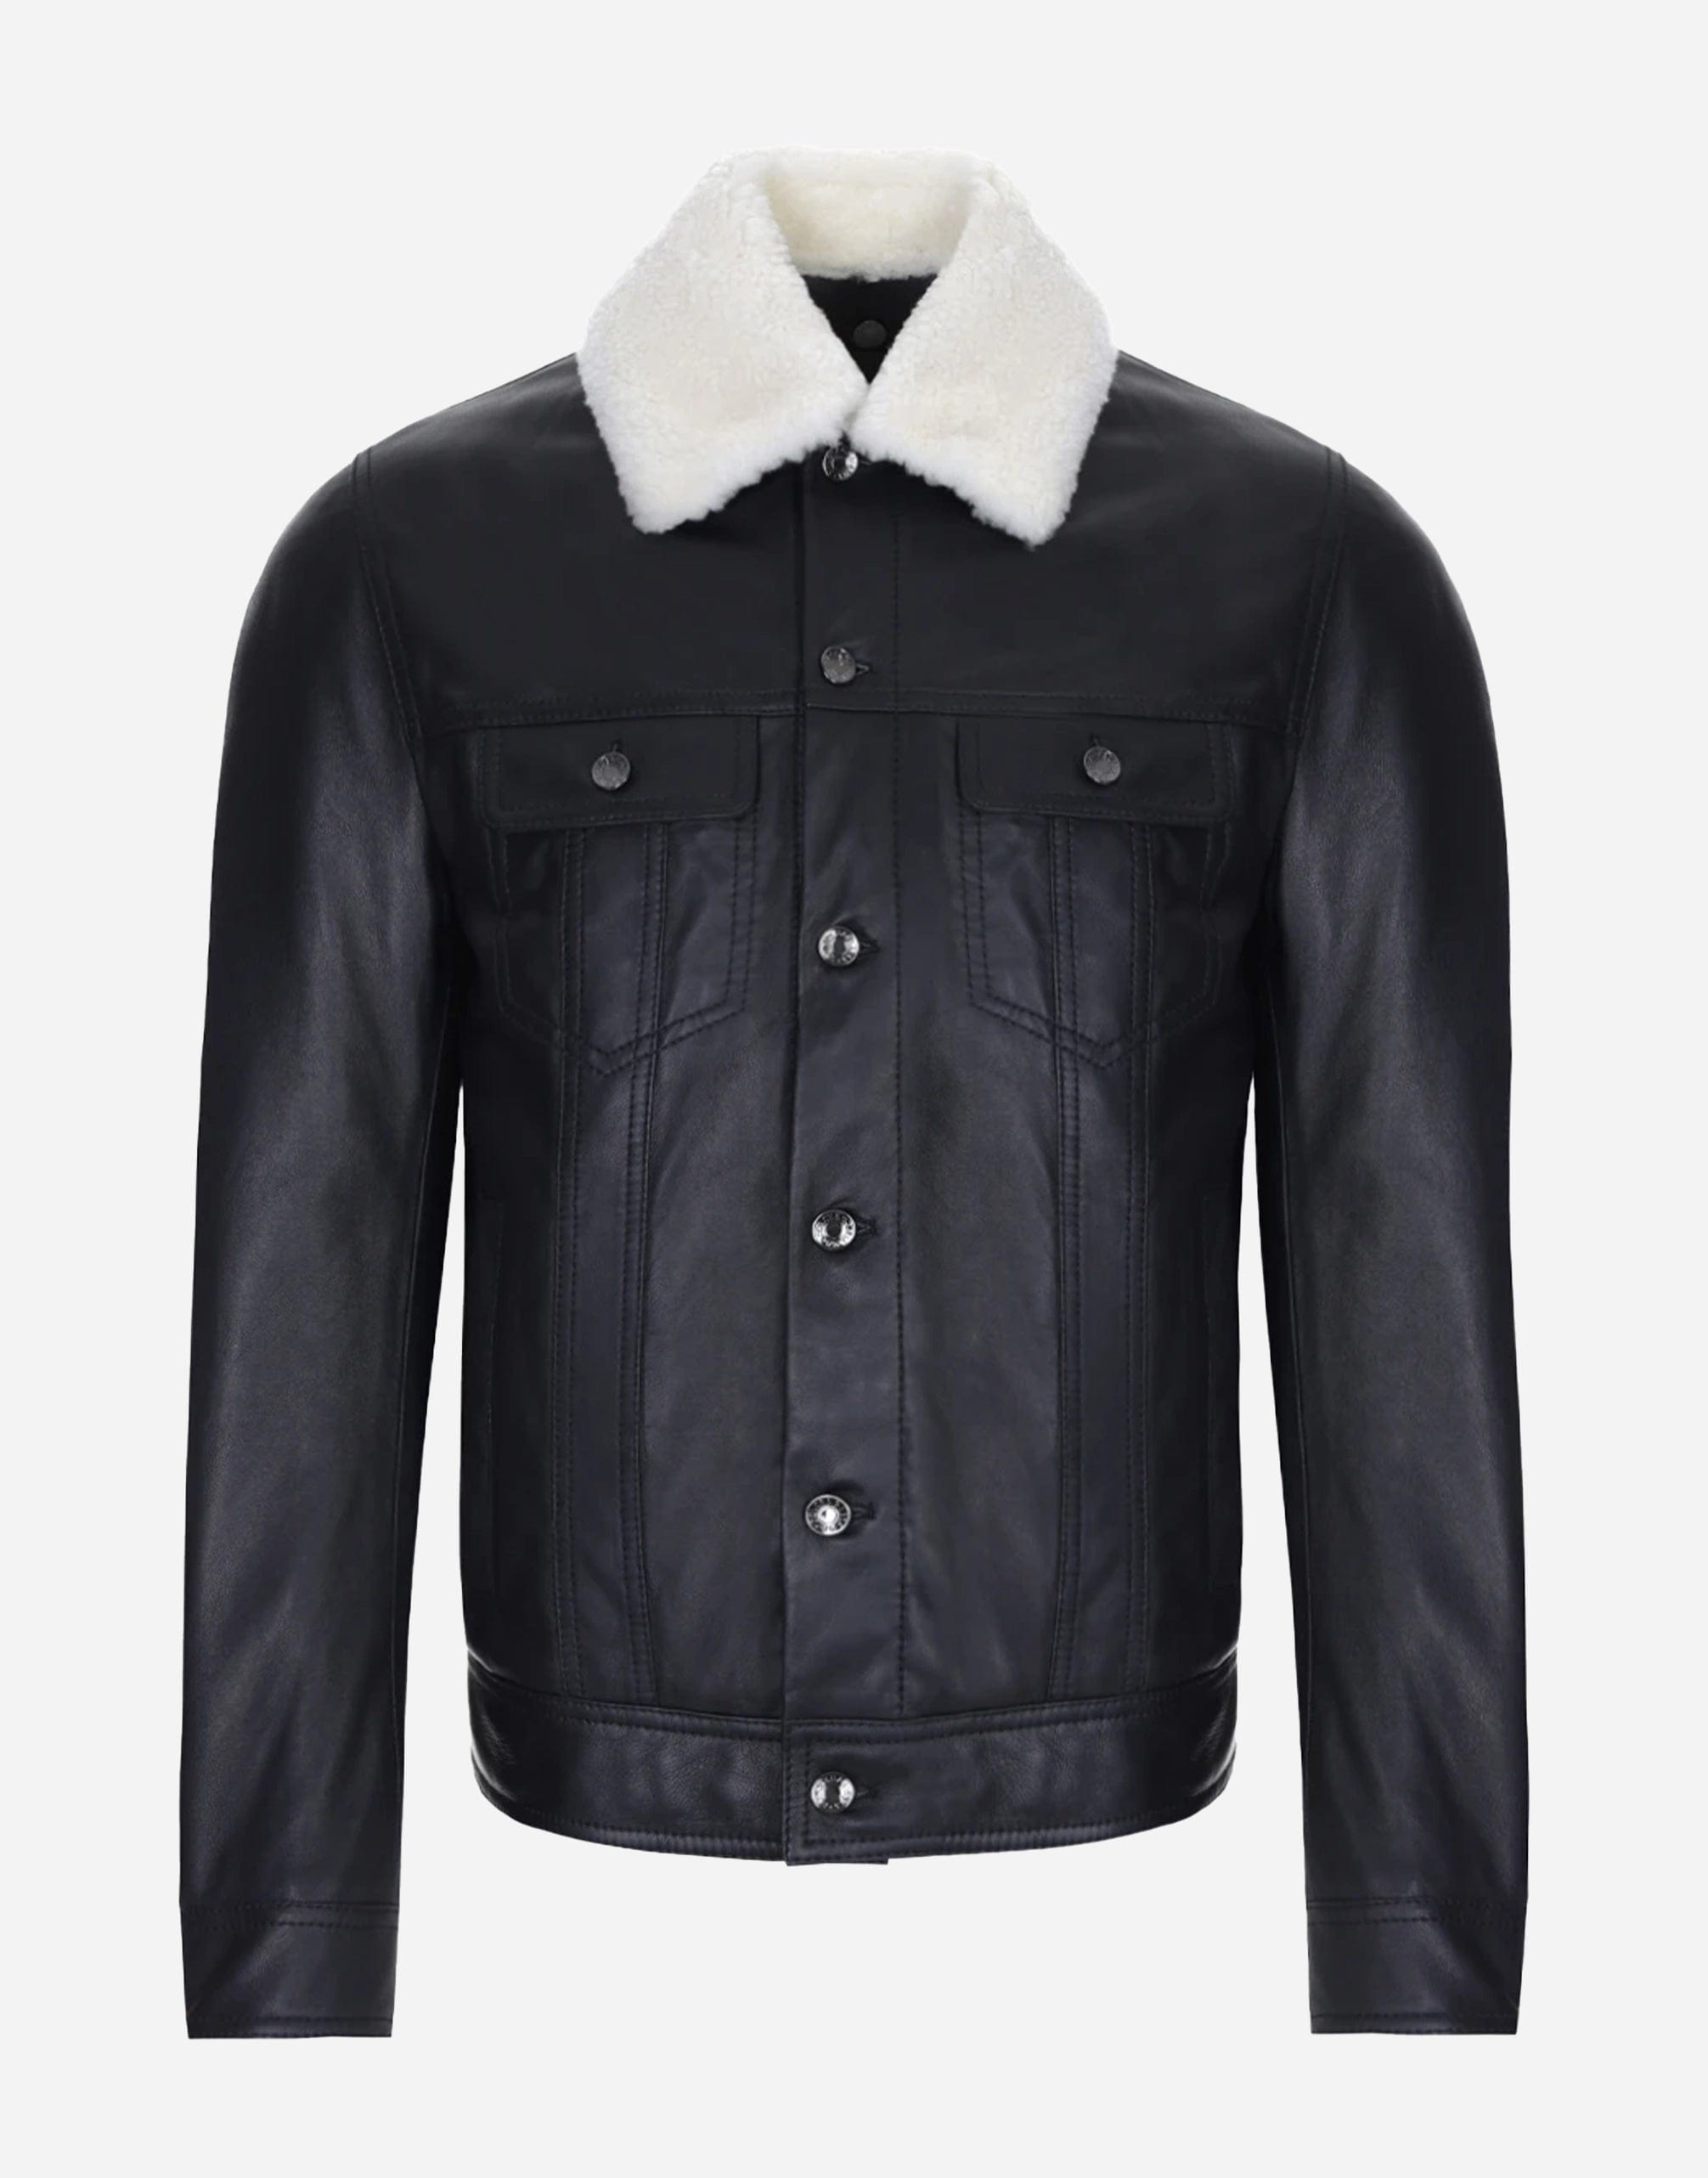 Dolce & Gabbana Quilted Lambskin Jacket